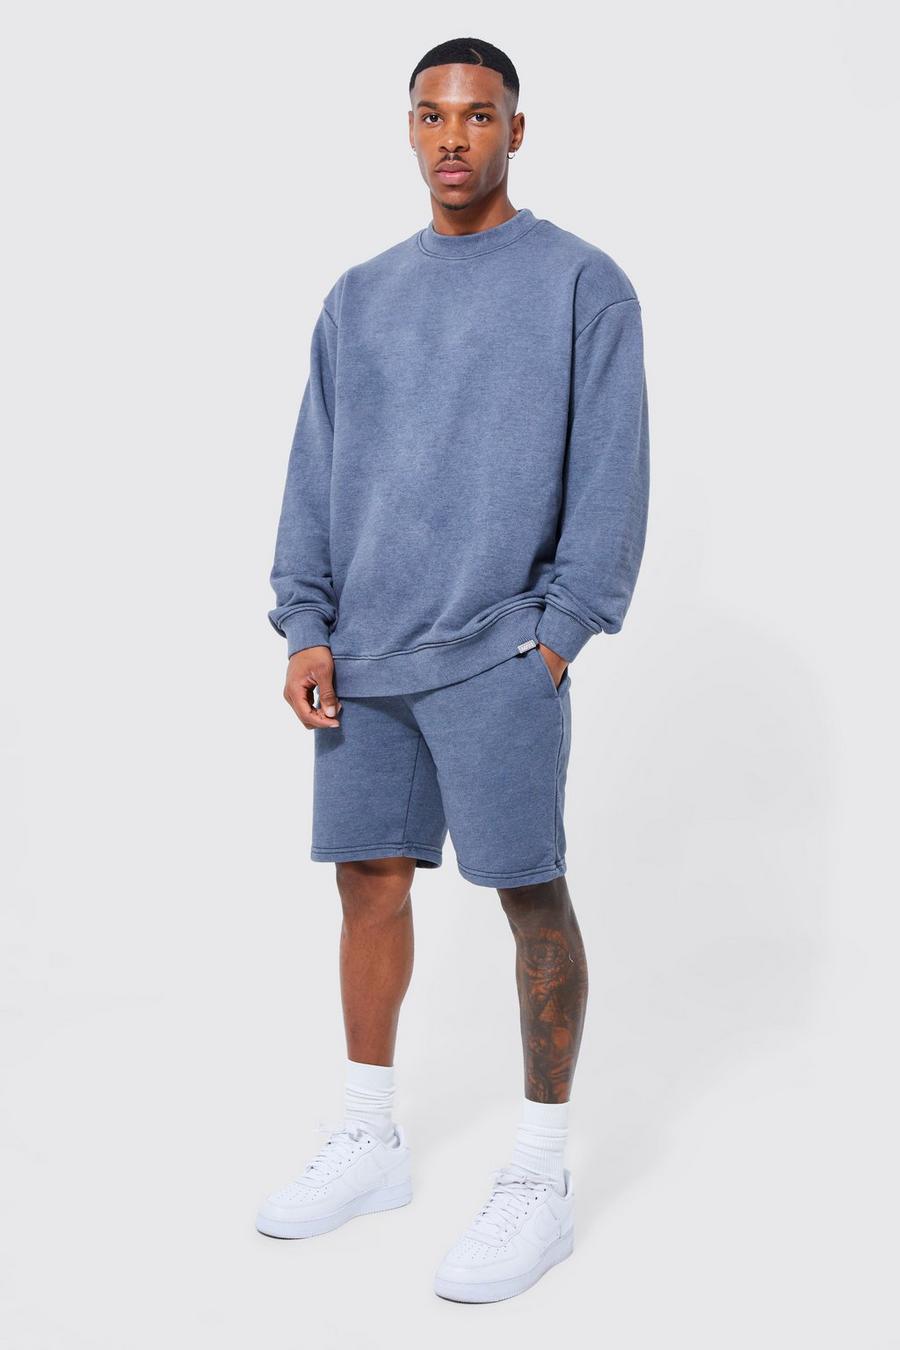 Kurzer Oversize Man Sweatshirt-Trainingsanzug mit Acid-Waschung, Charcoal grau